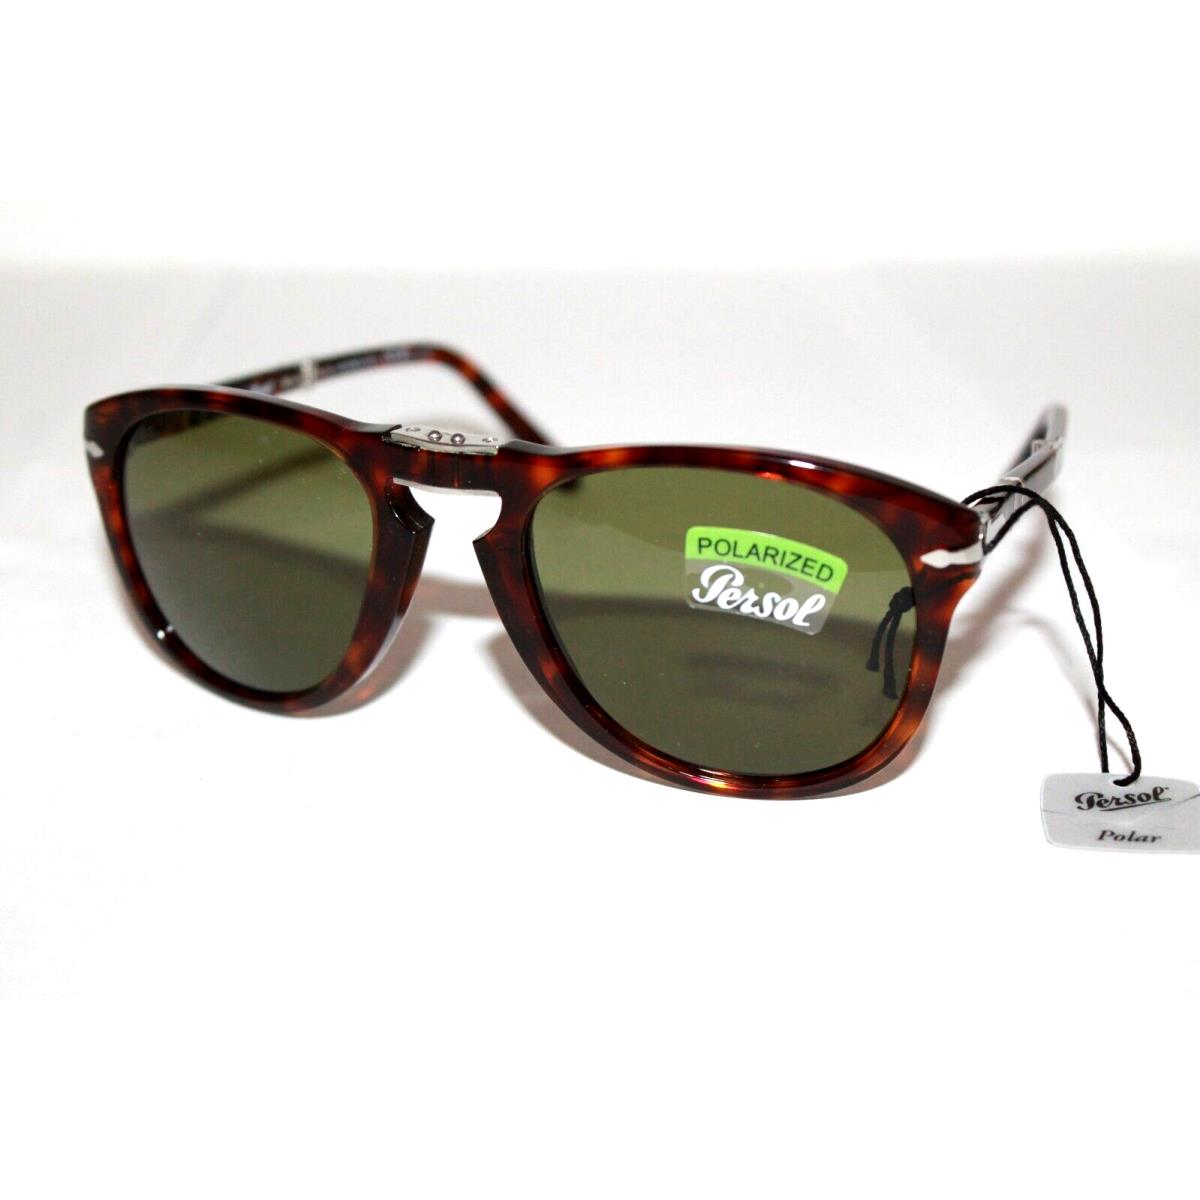 Persol Steve Mcqueen Polarized Sunglasses P00714SM 24/P1 Tort Brown / Green Lens - Frame: Brown, Lens: Green